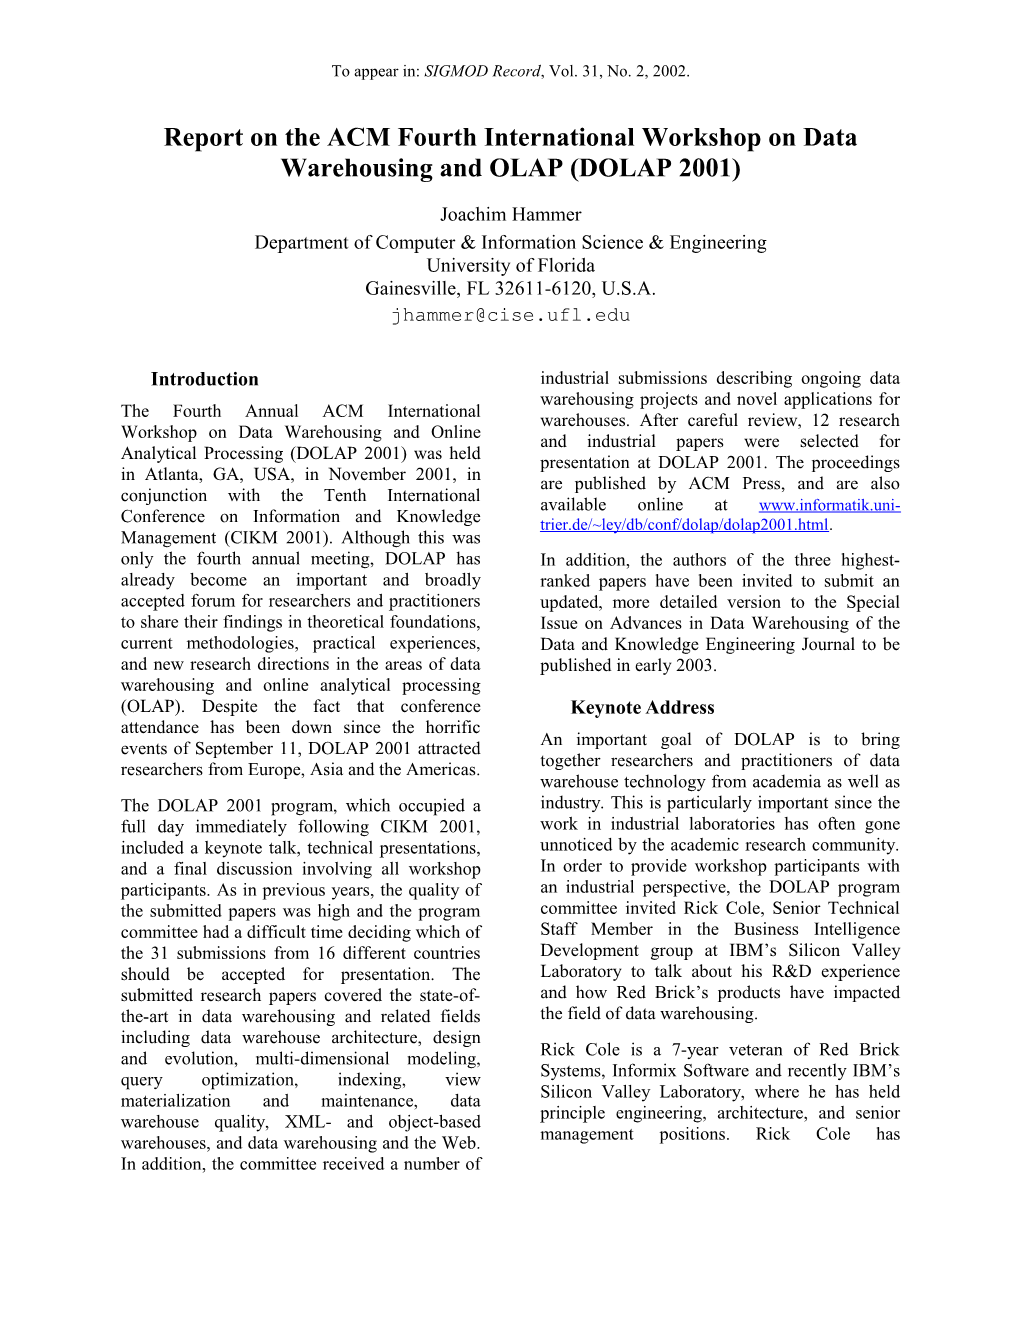 Report on the ACM Fourth International Workshop on Data Warehousing and OLAP (DOLAP 2001)